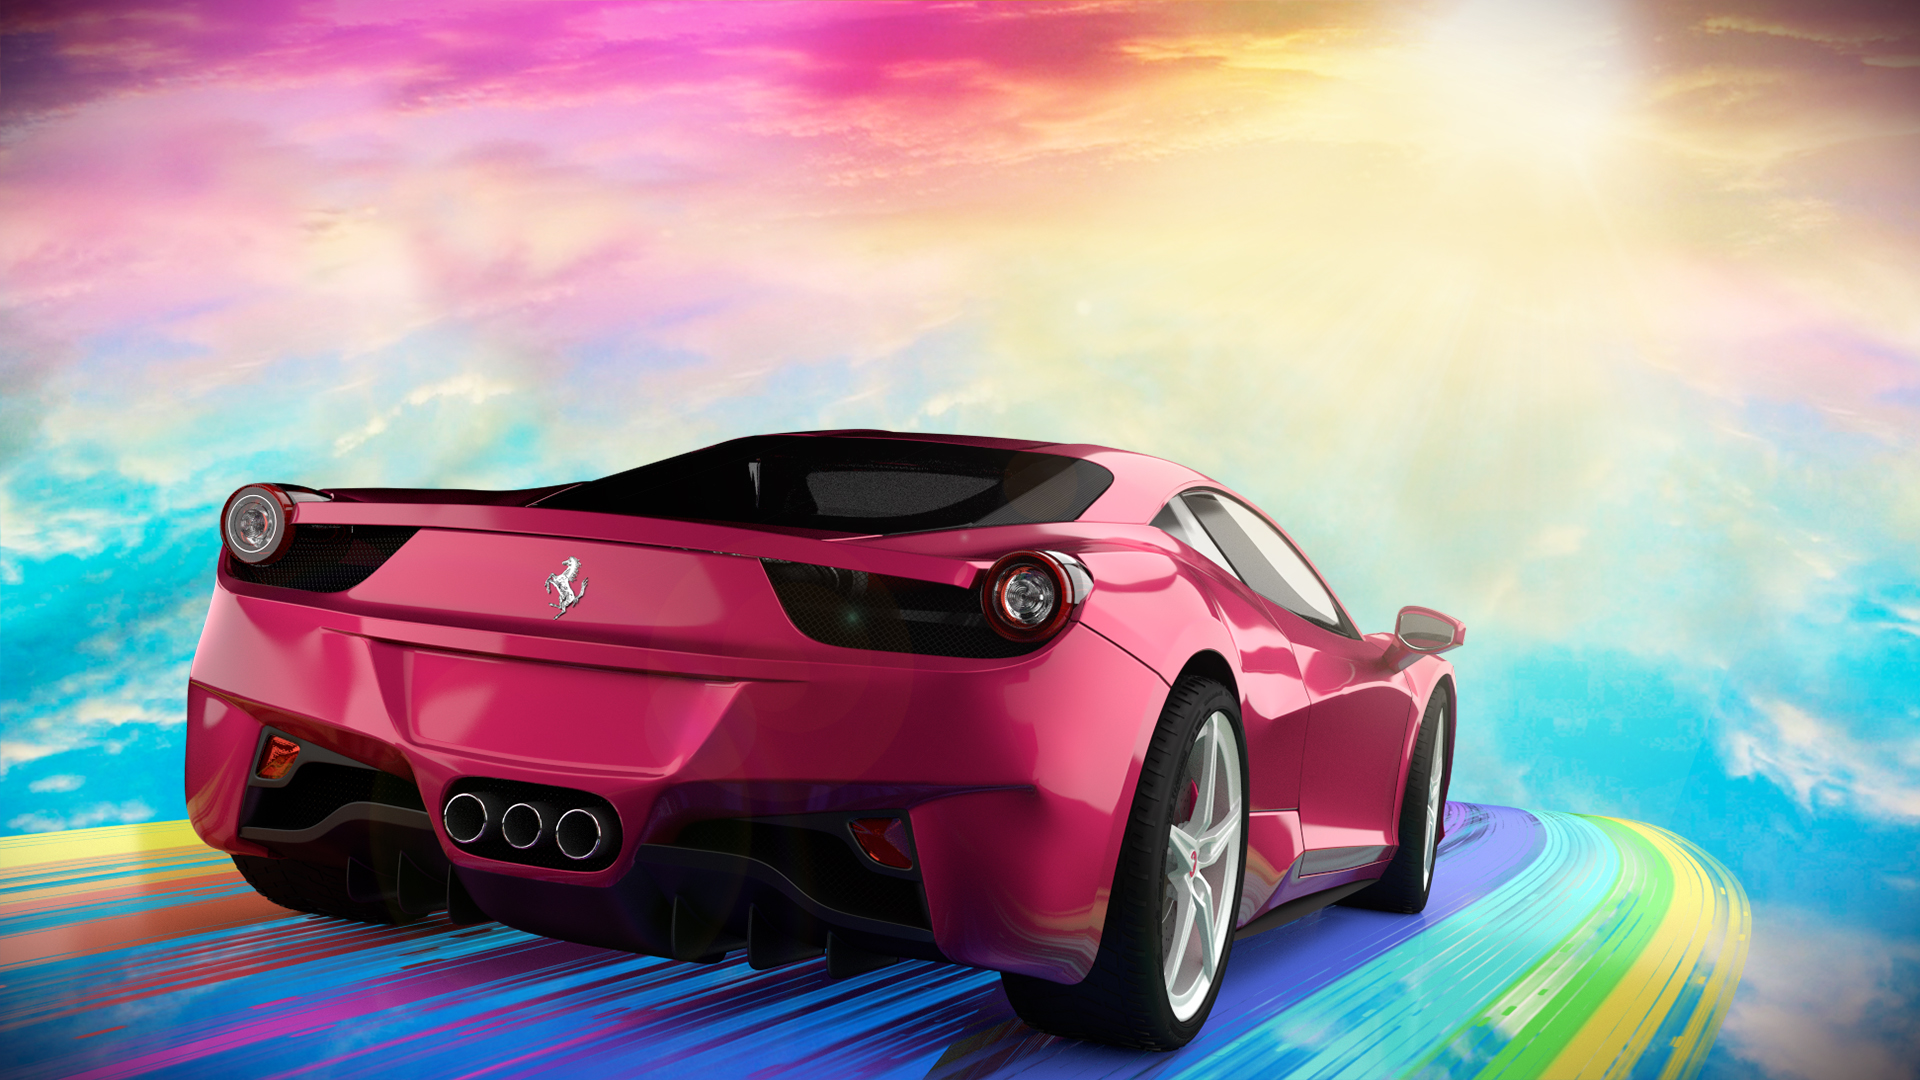 Black and pink Ferrari sport car HD wallpaper download